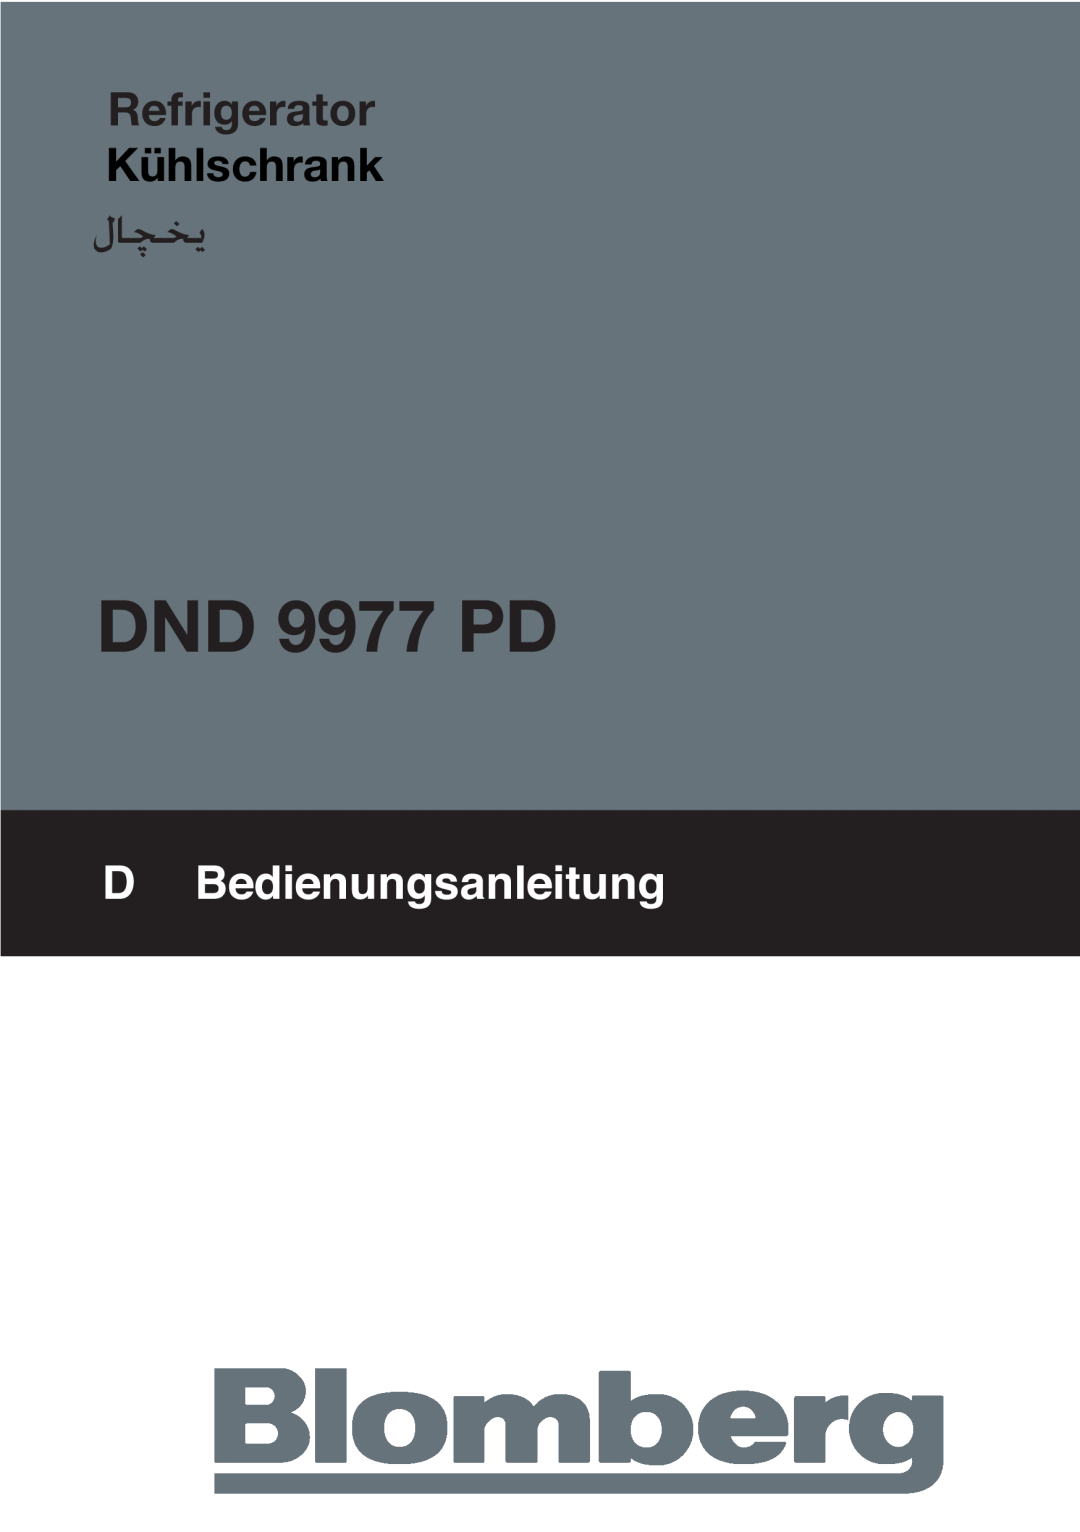 Blomberg DND 9977 PD manual لاچخی, Refrigerator Kühlschrank, DBedienungsanleitung 